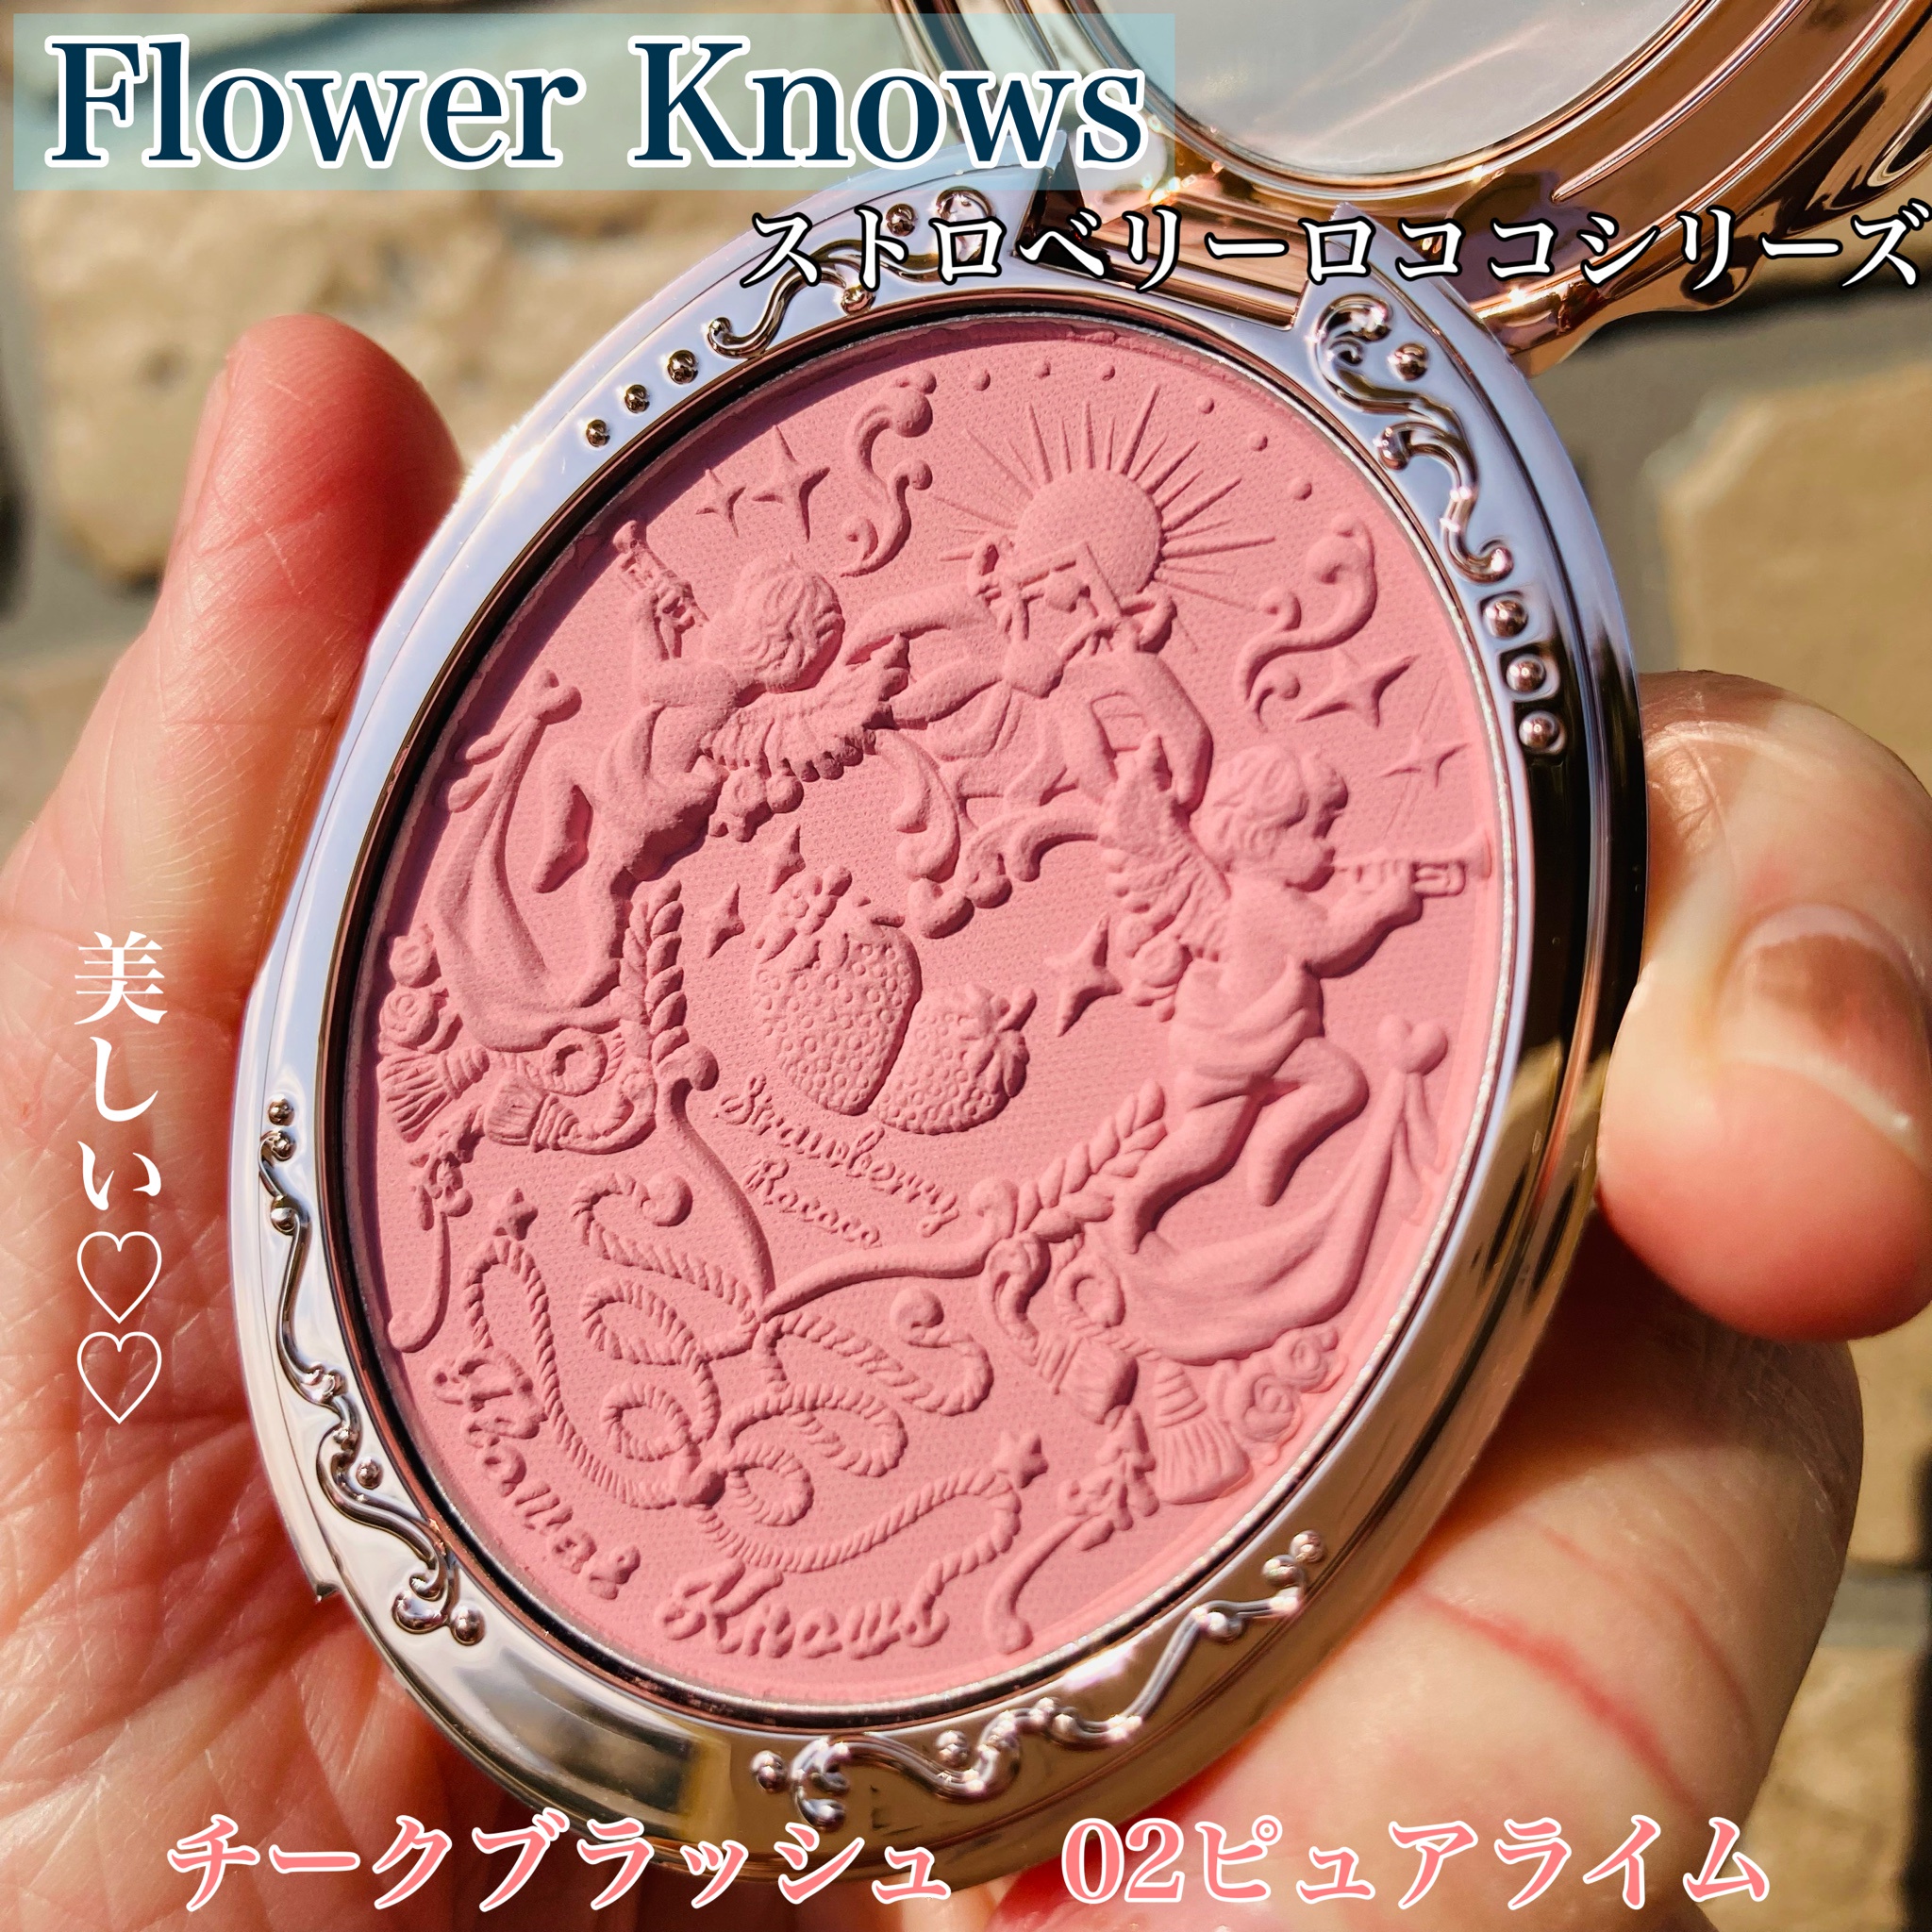 FlowerKnows(フラワーノーズ) / フラワーノーズ ストロベリーロココ 